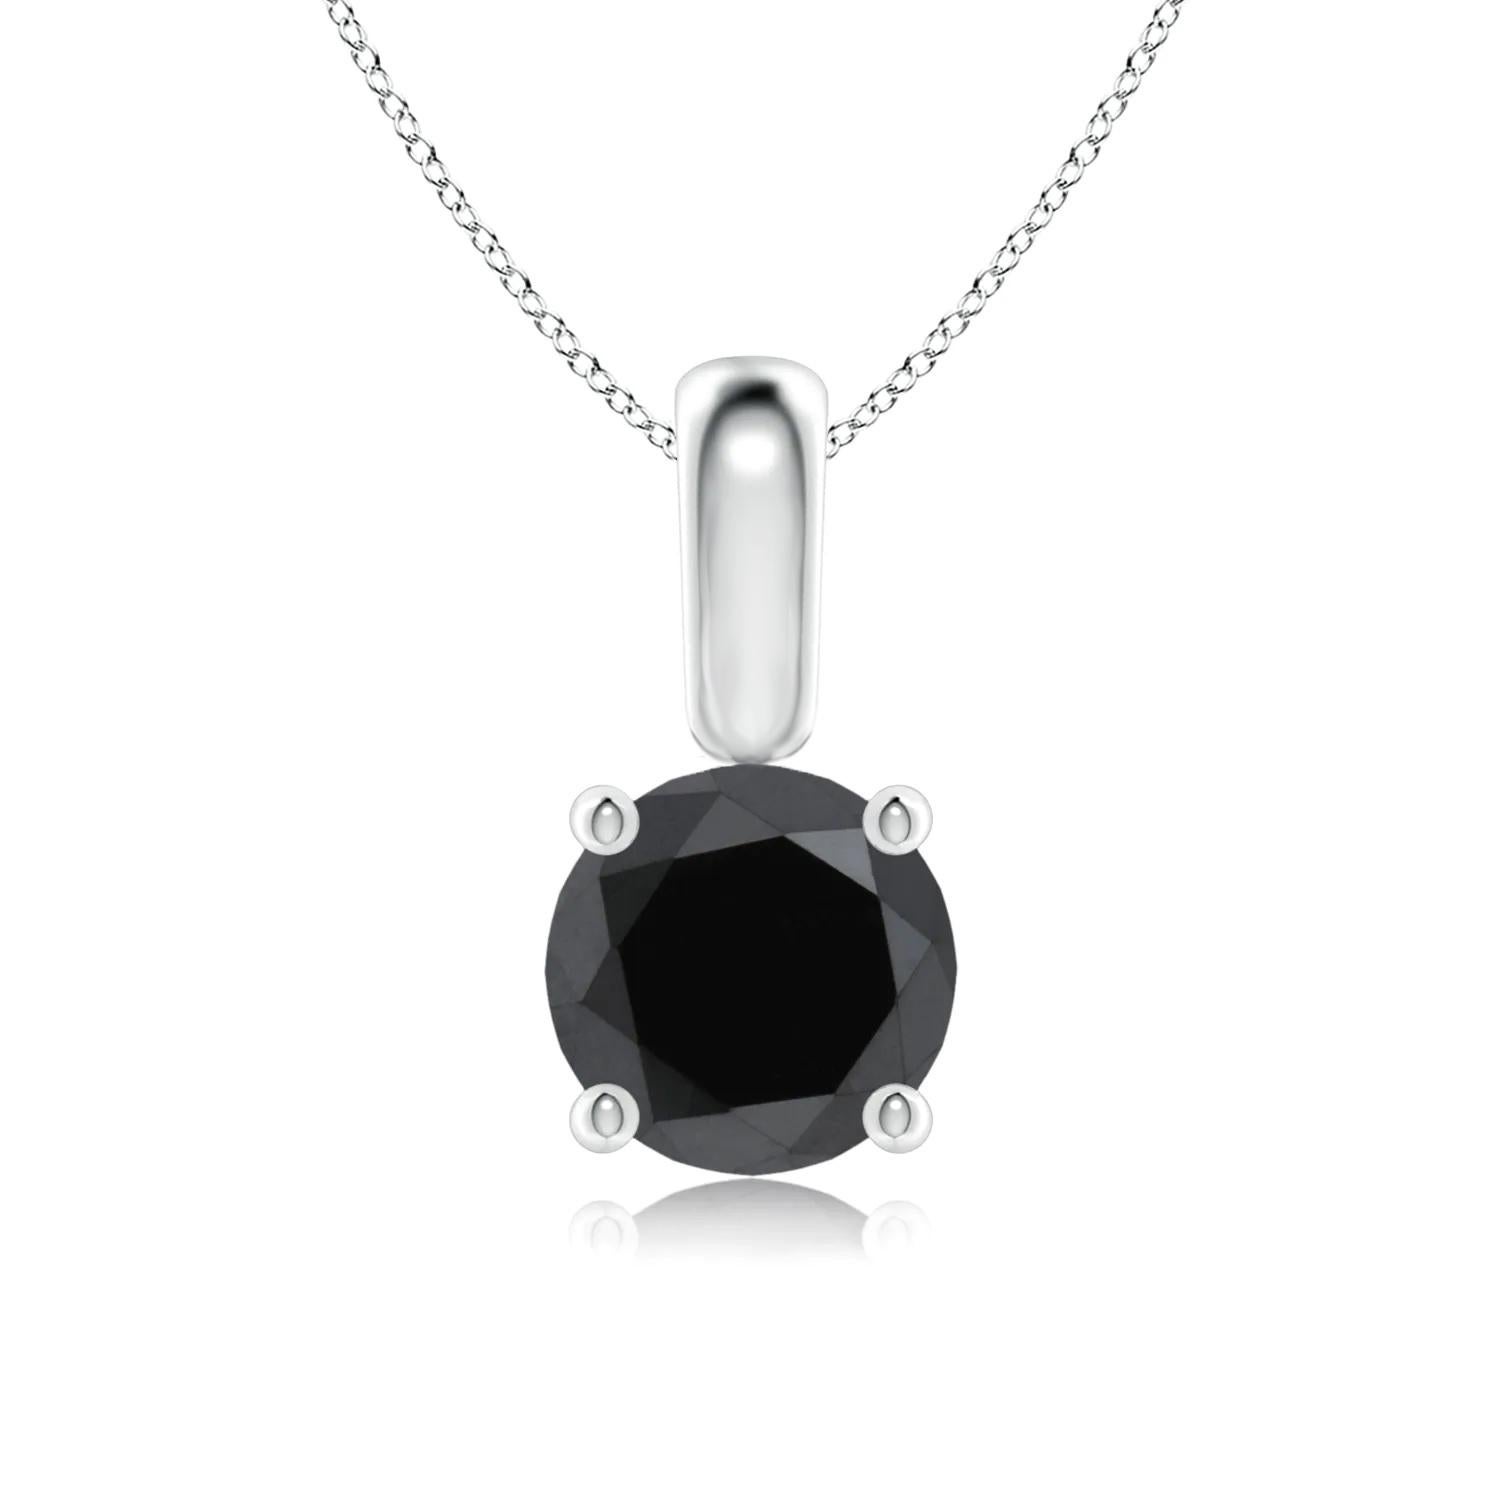 Contemporary 2.28 Carat Round Black Diamond Solitaire Pendant Necklace in 14K White Gold